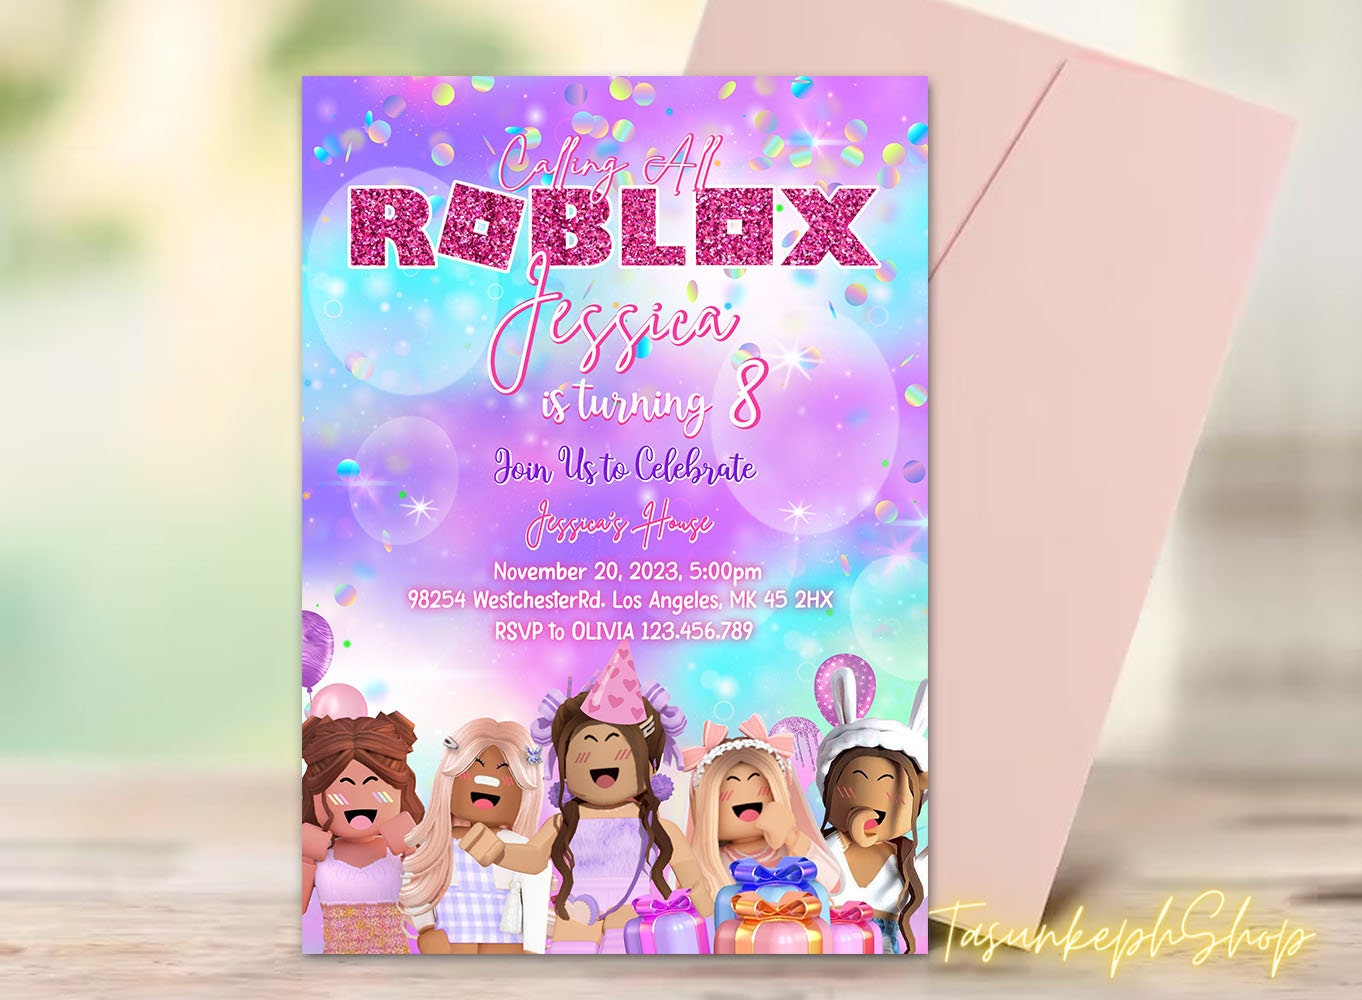 Roblox Girl Birthday Invitation